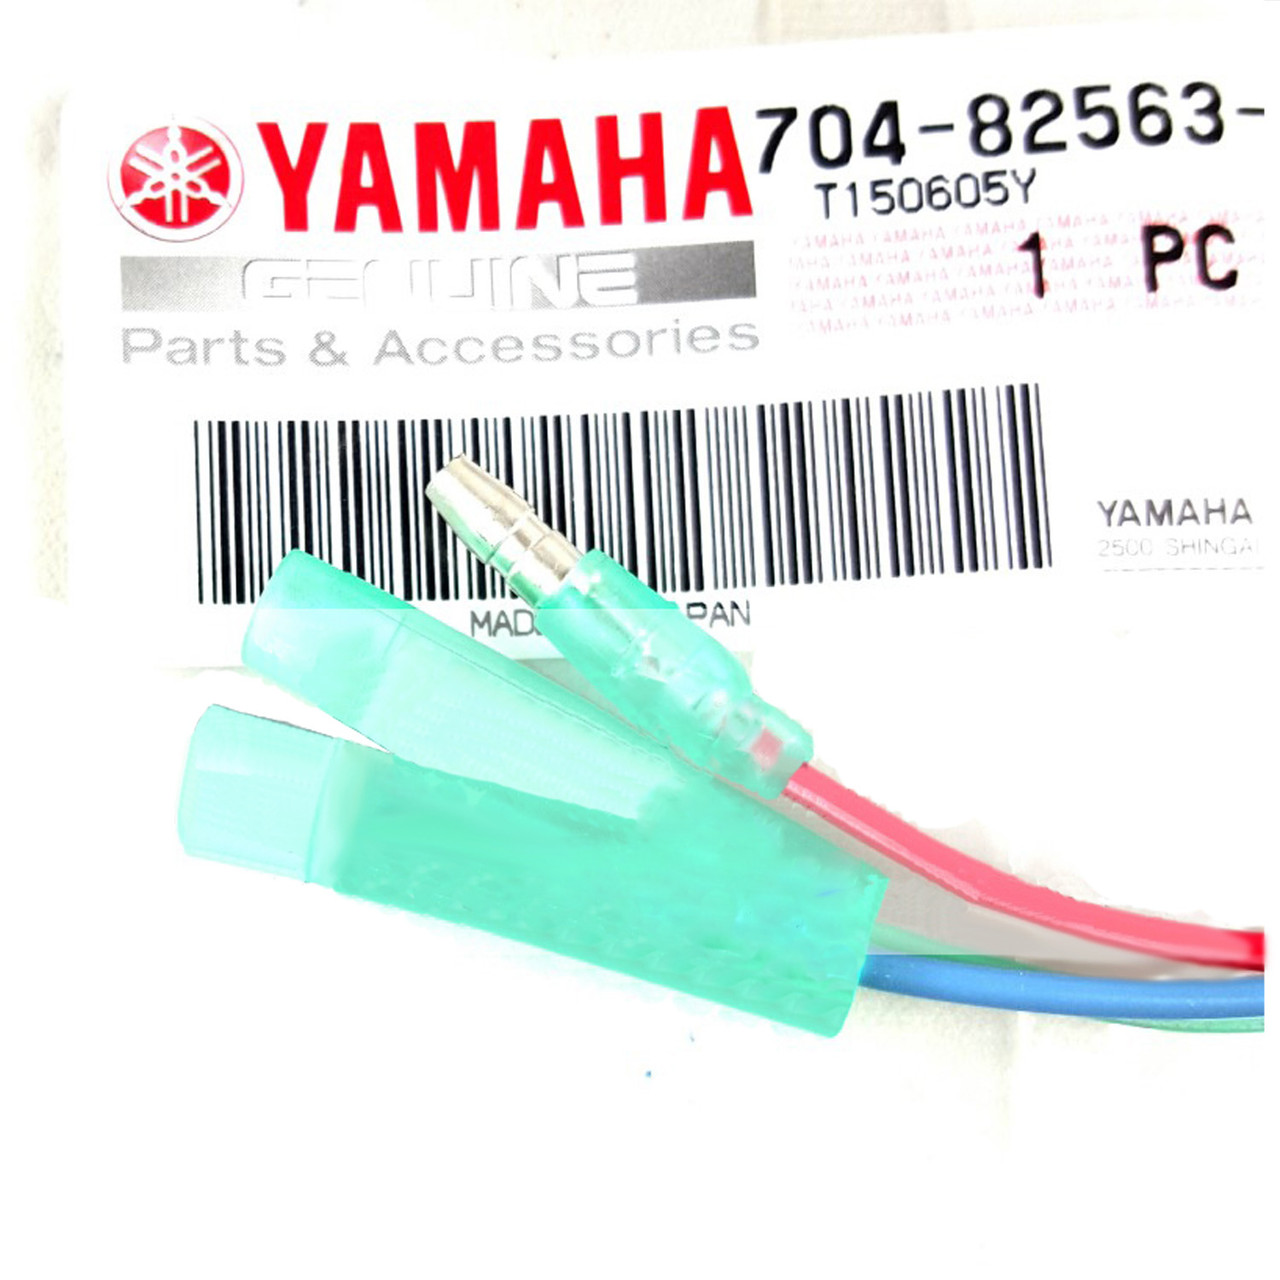 Yamaha New OEM Trim & Tilt Switch Assemby, 704-82563-41-00, 704-82563-42-00